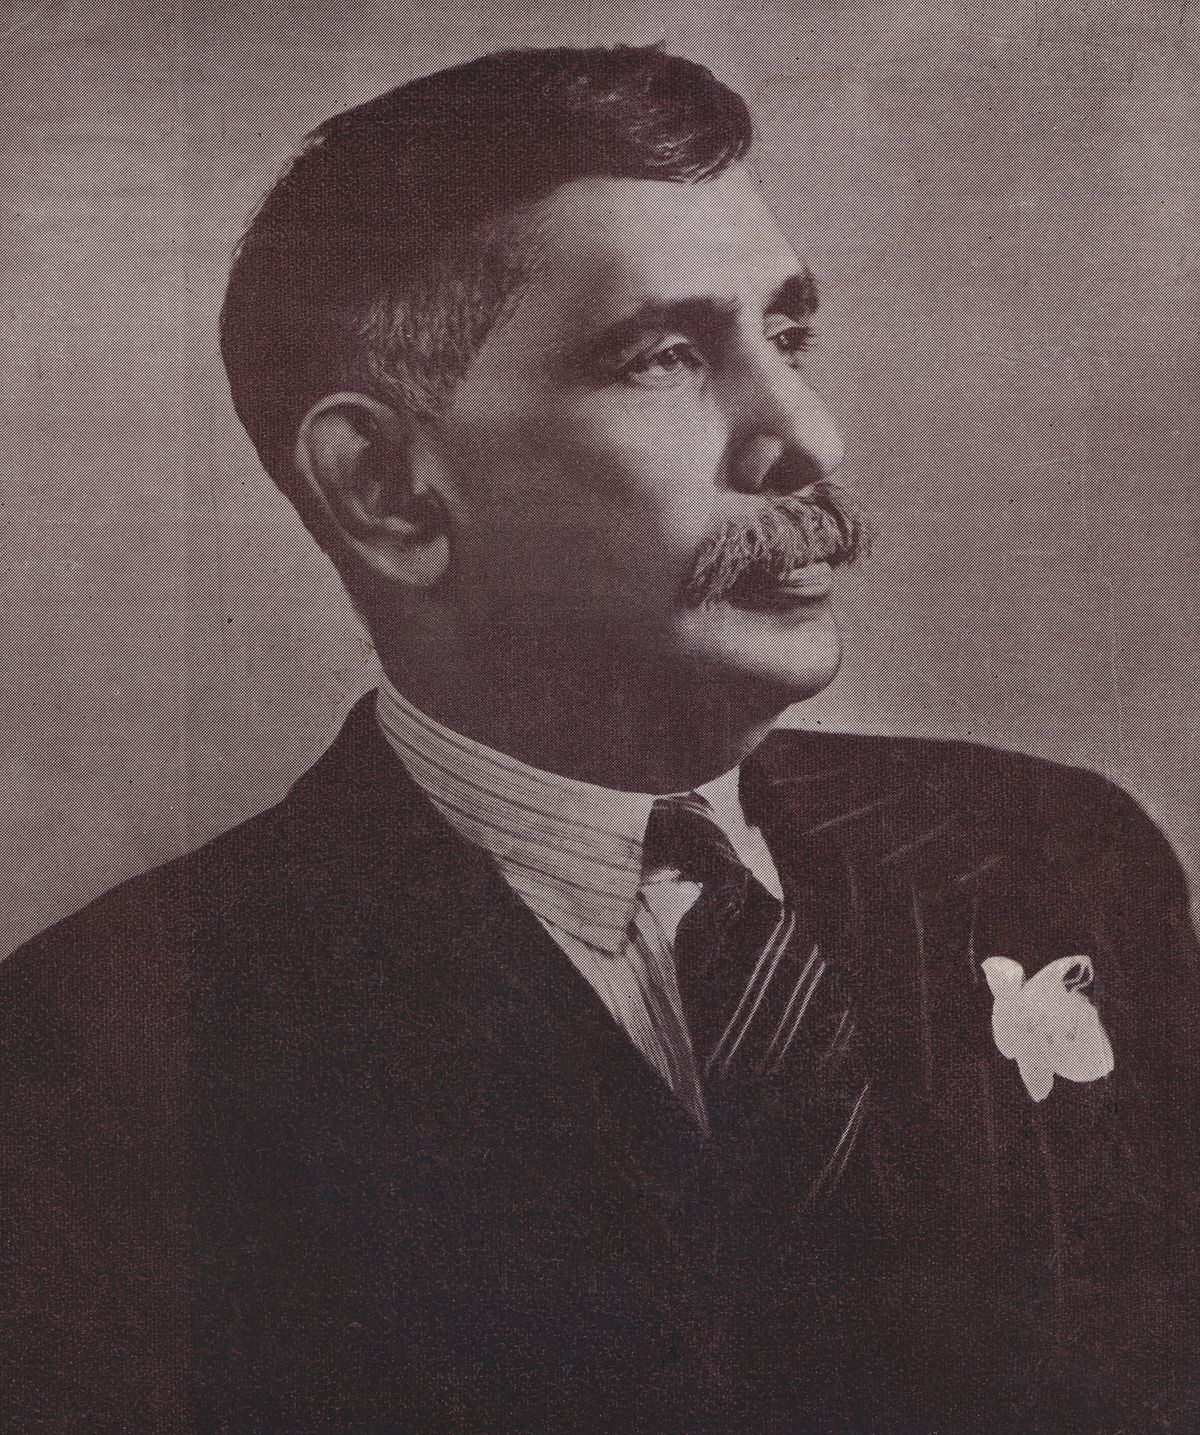 Founder of Sri Lanka